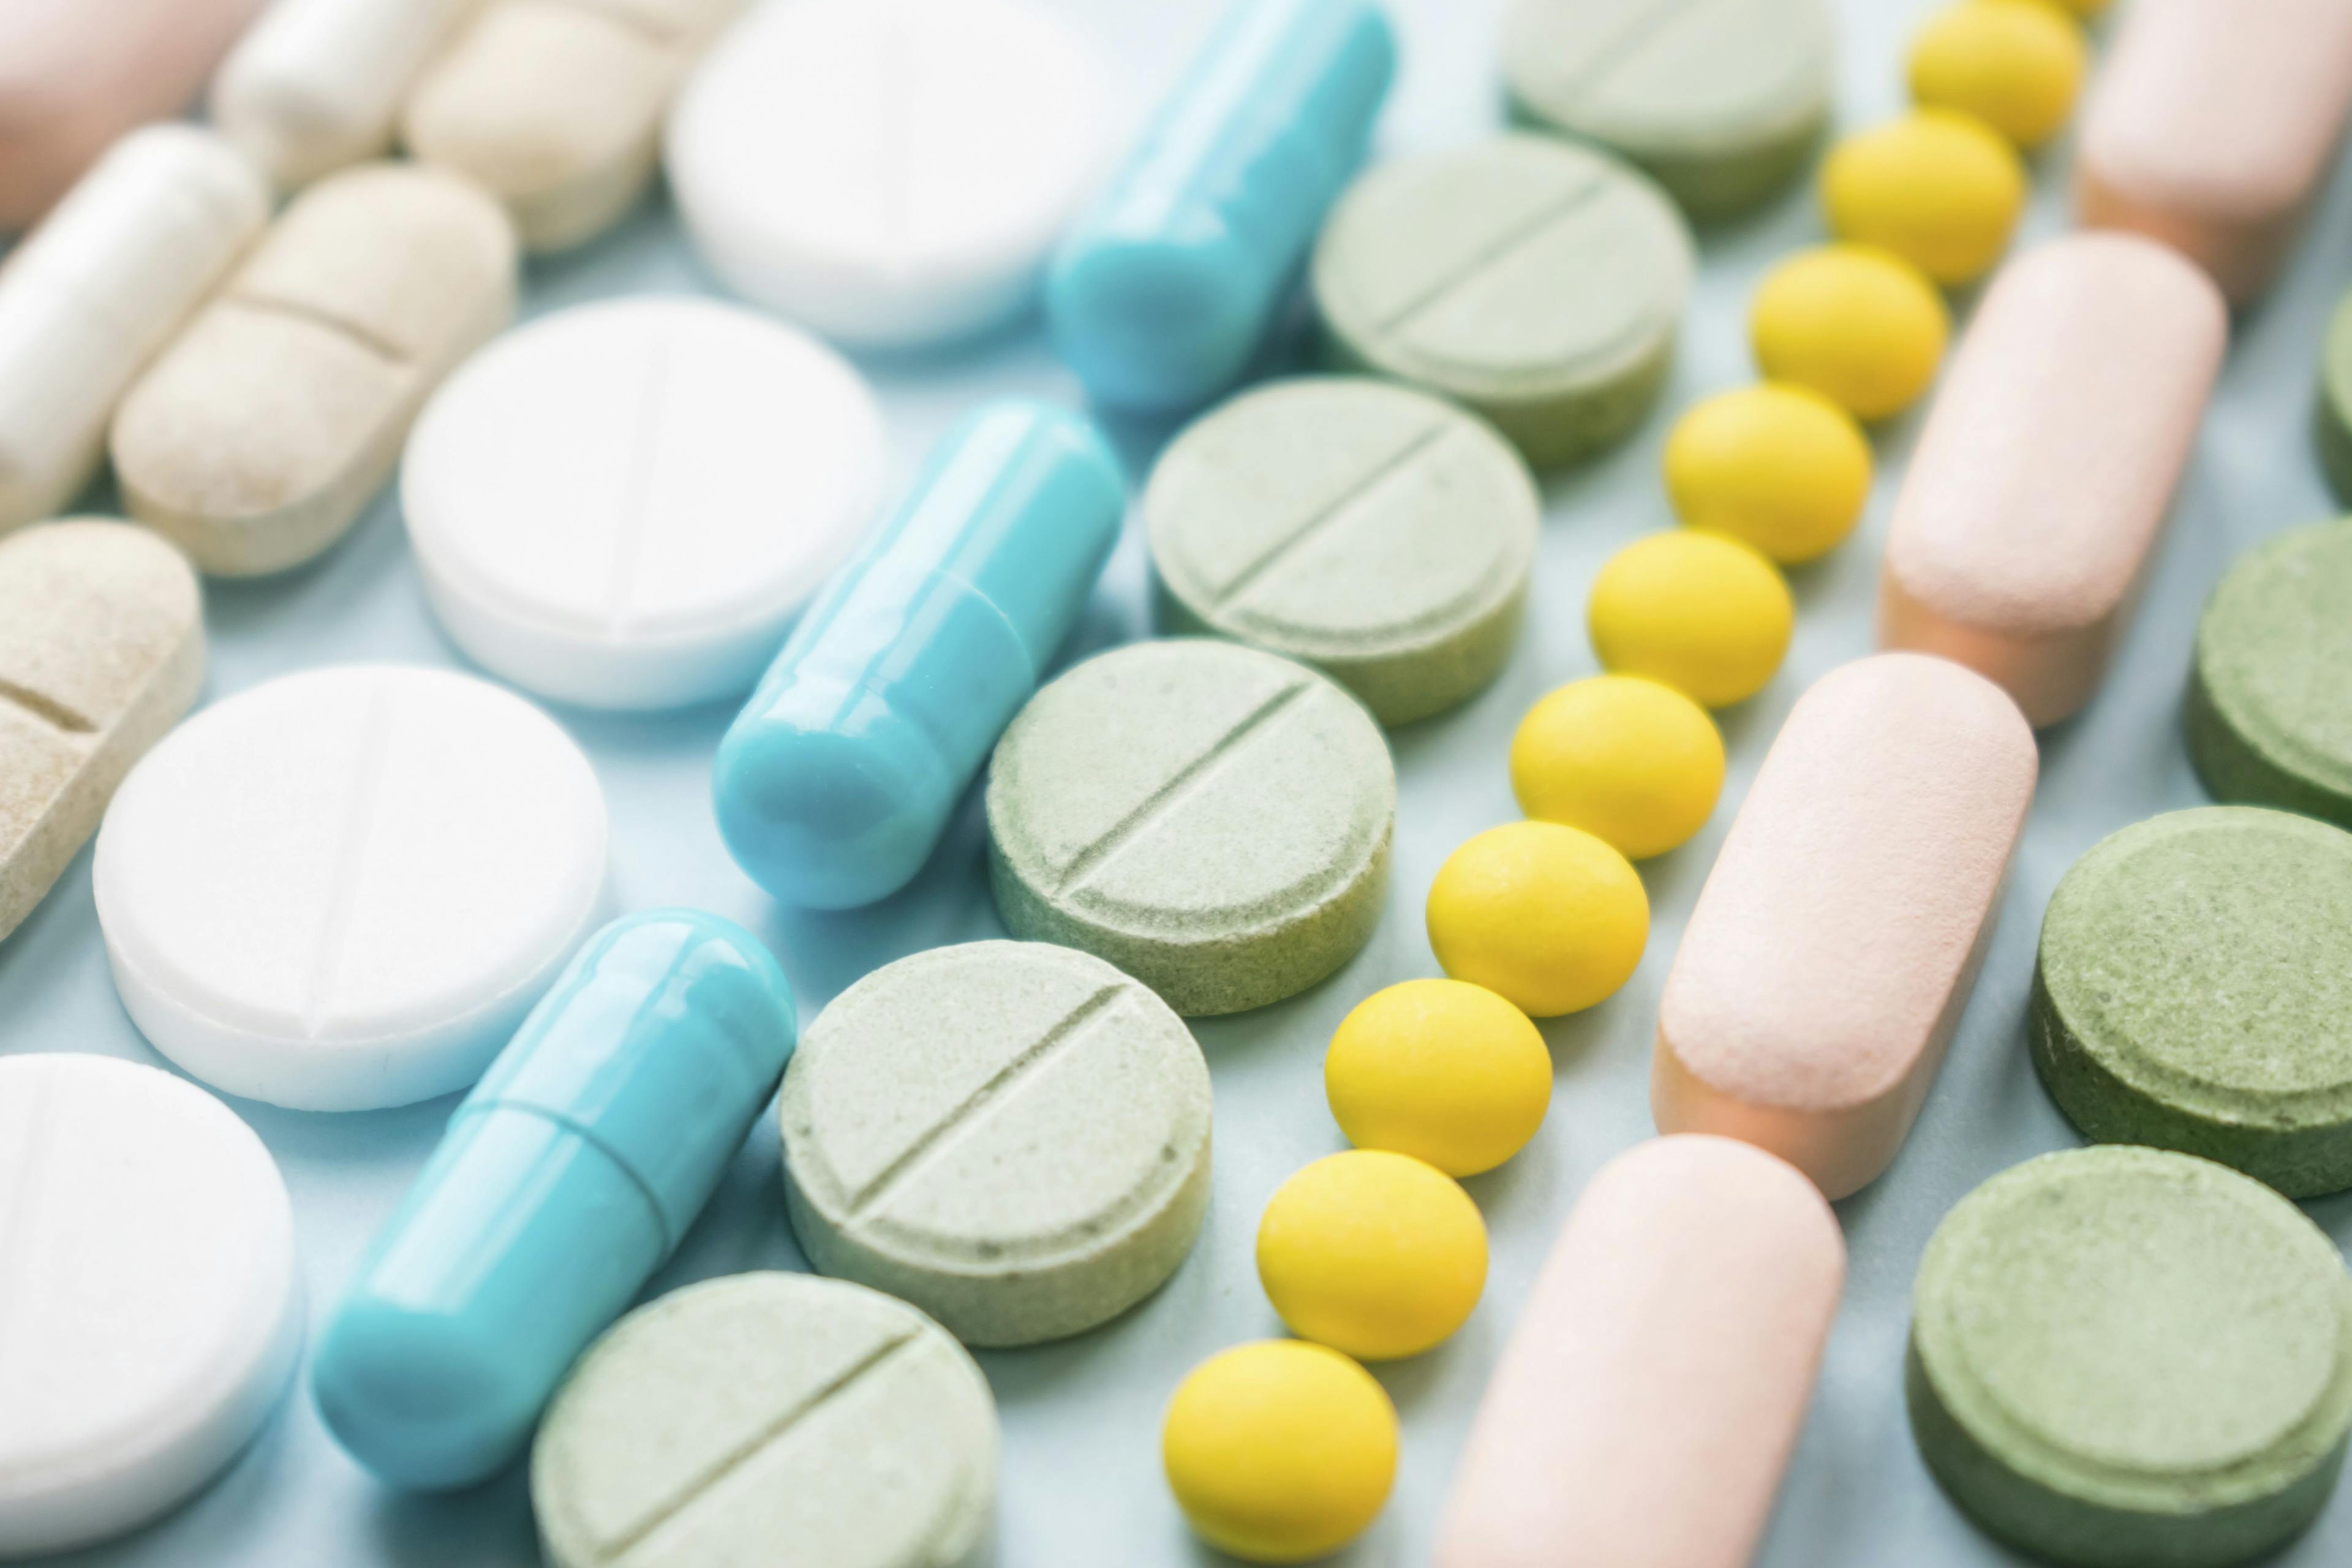 The link between physician distress and antibiotic prescribing